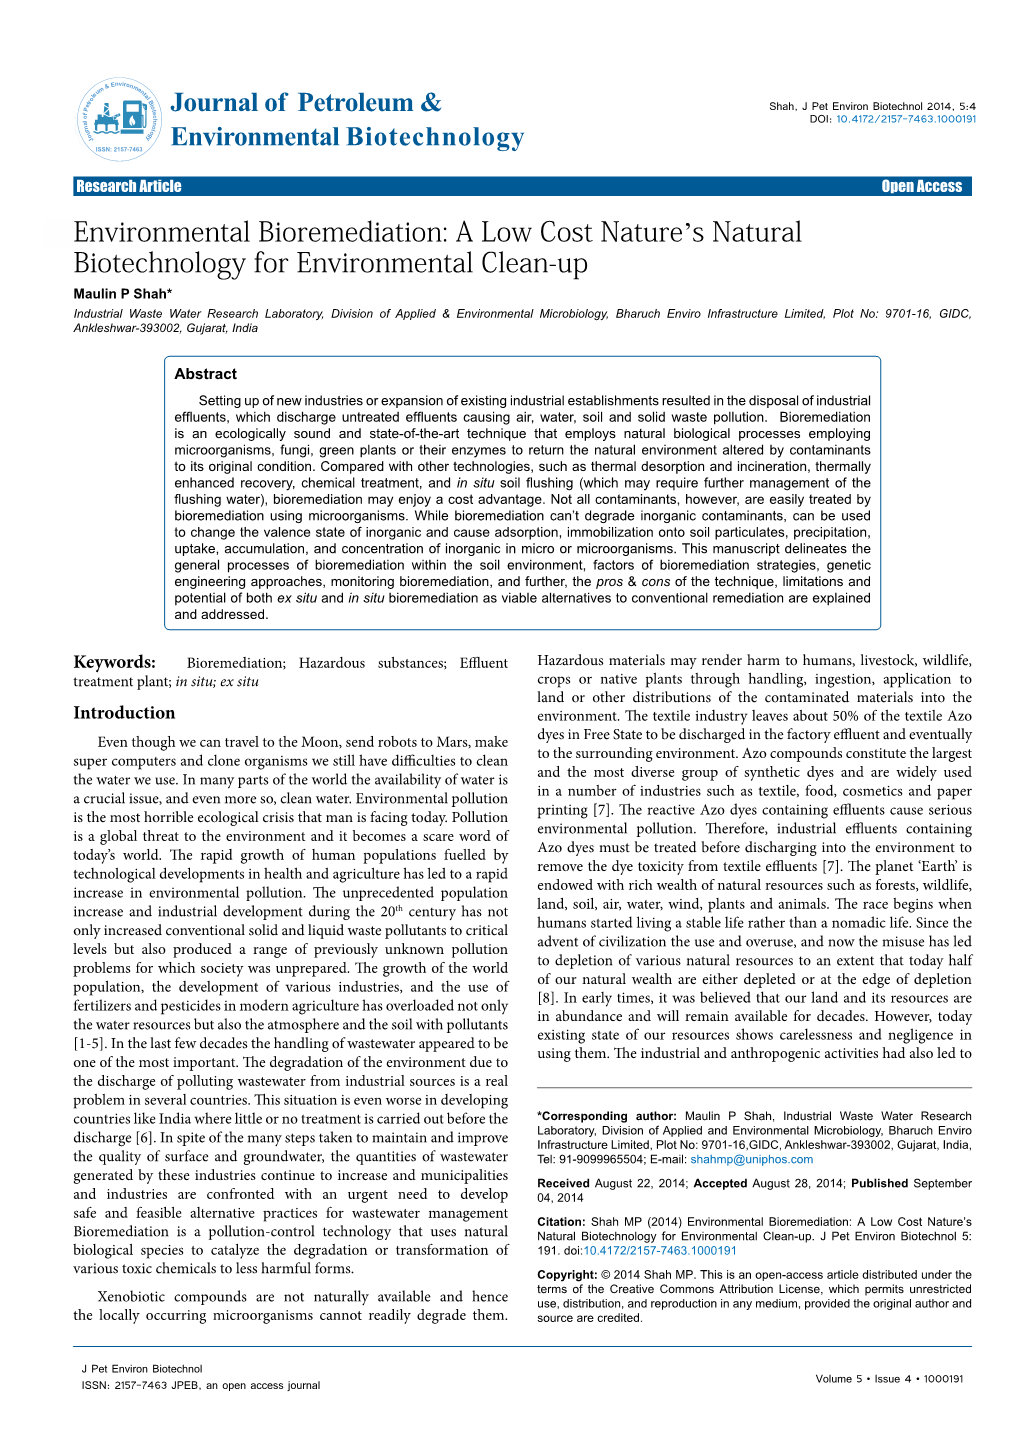 Environmental Bioremediation: a Low Cost Nature's Natural